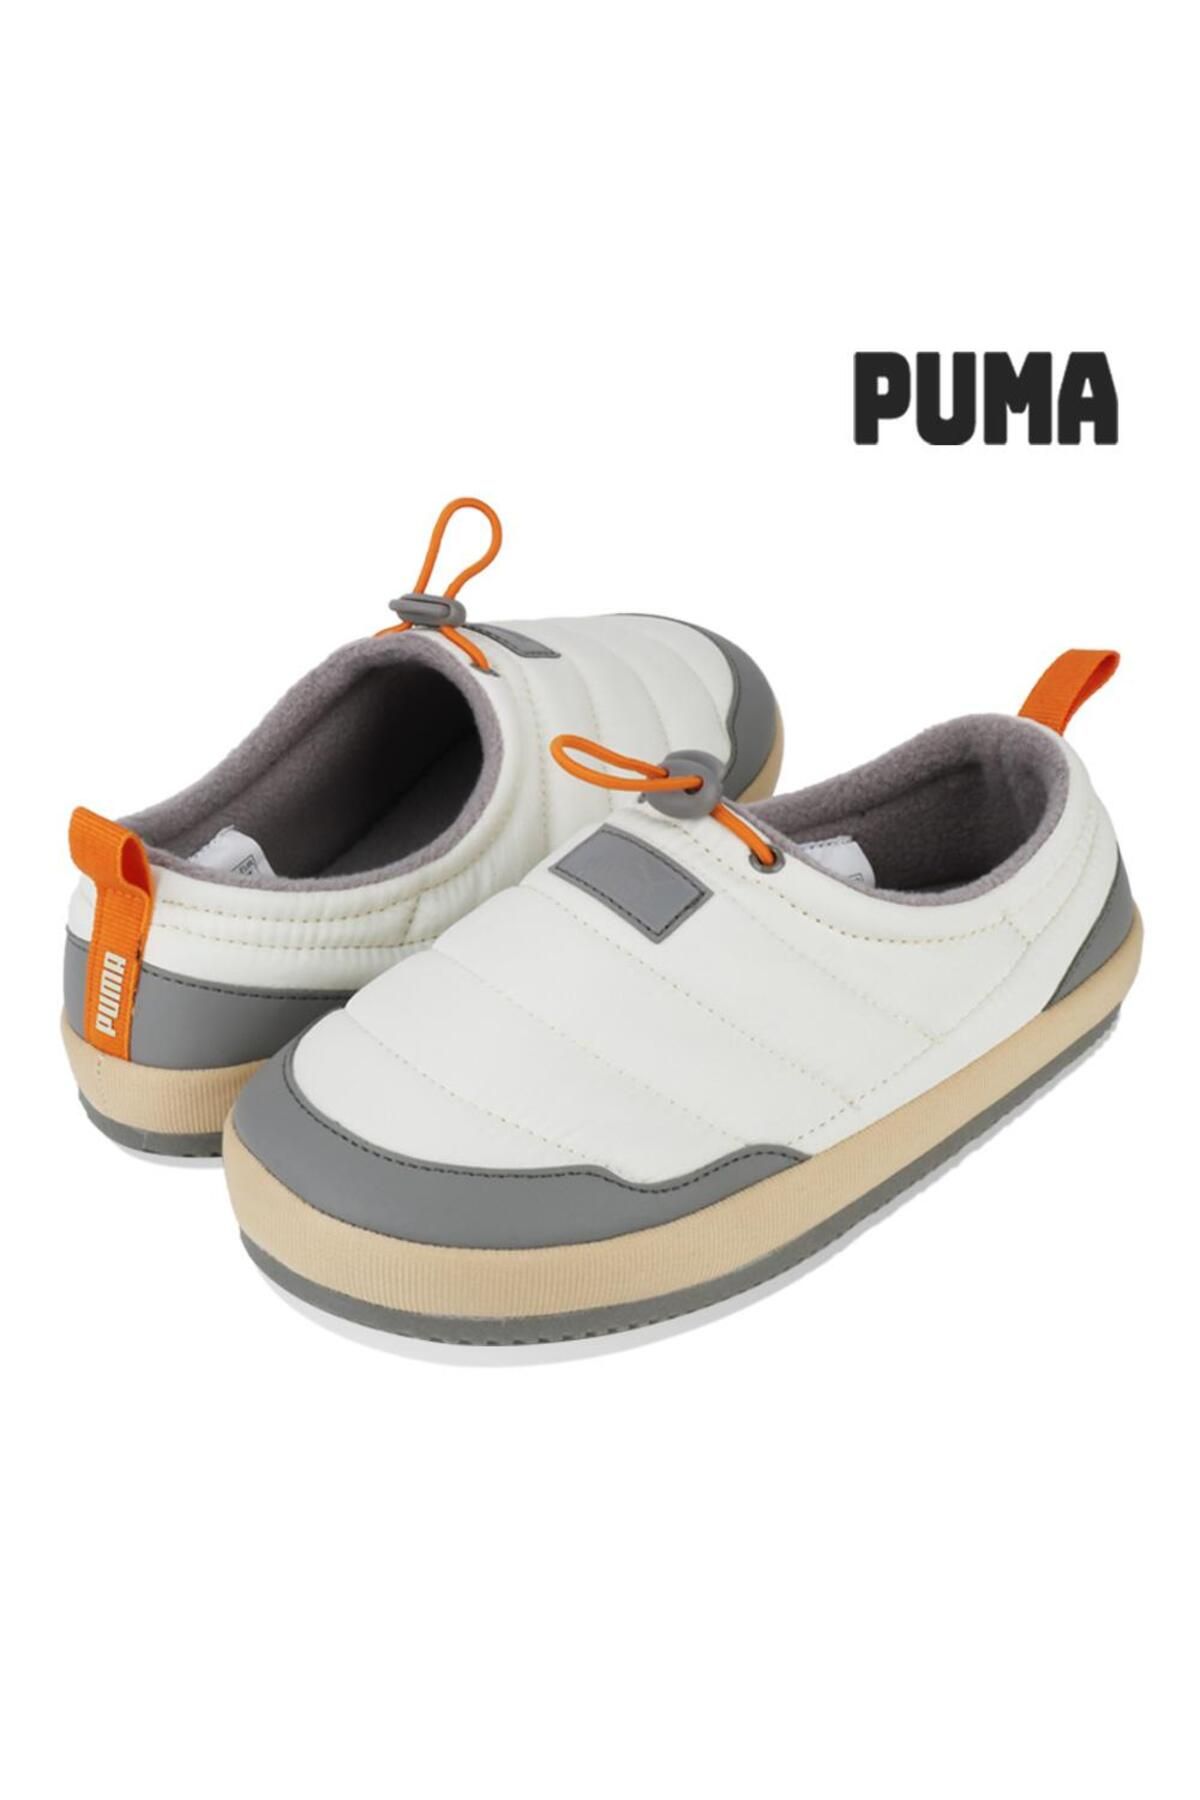 Puma TUFFPADDED PLUS 392836 03